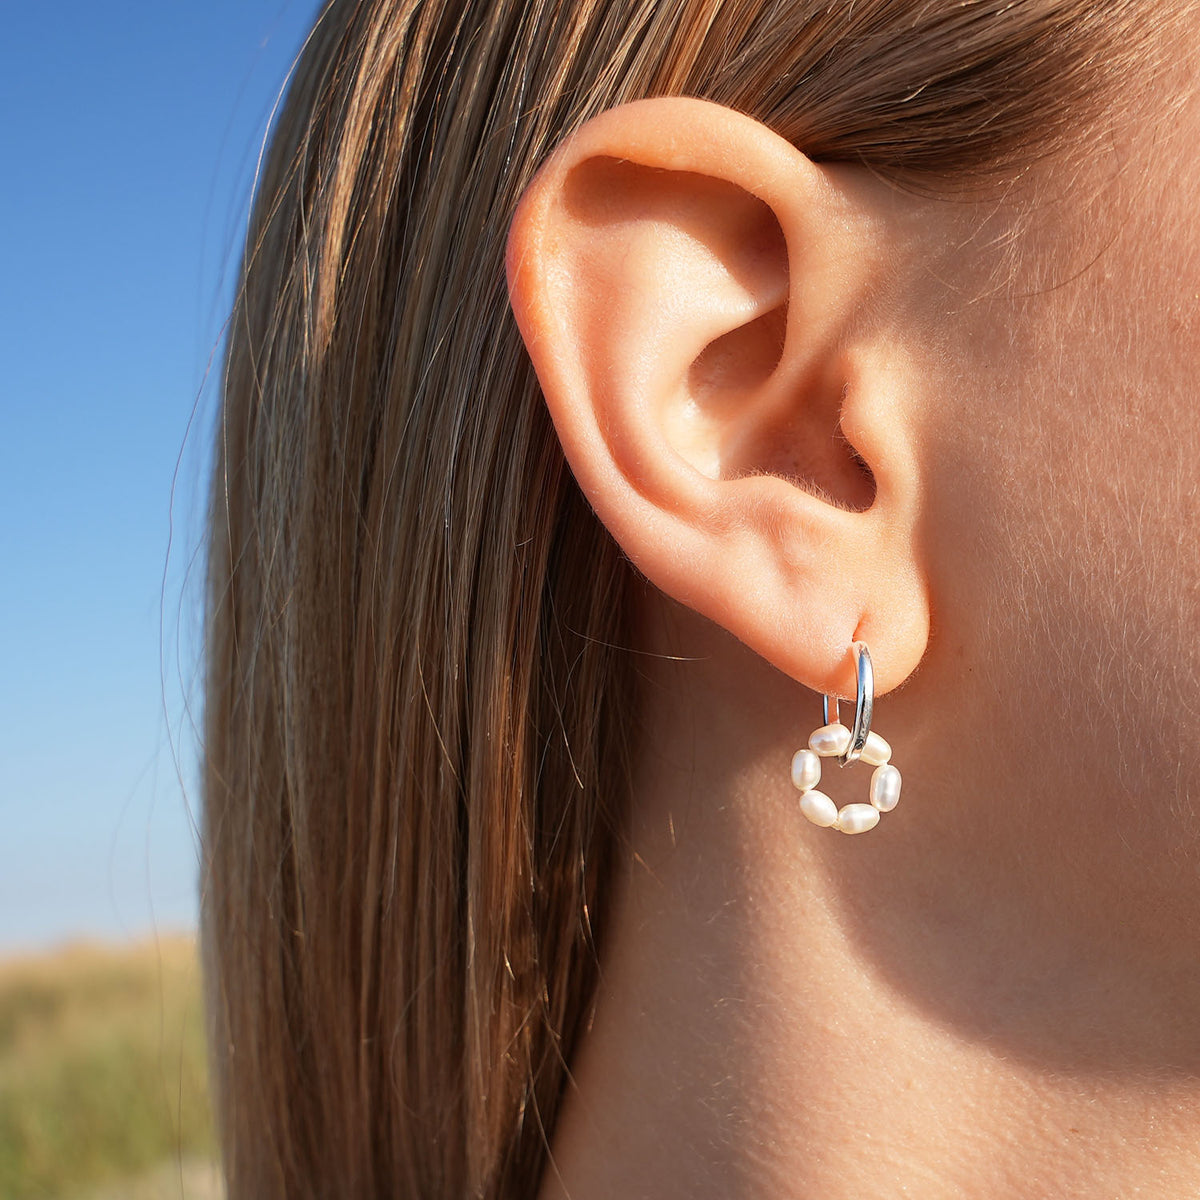 Pearl Earrings "Sofi" - Silver